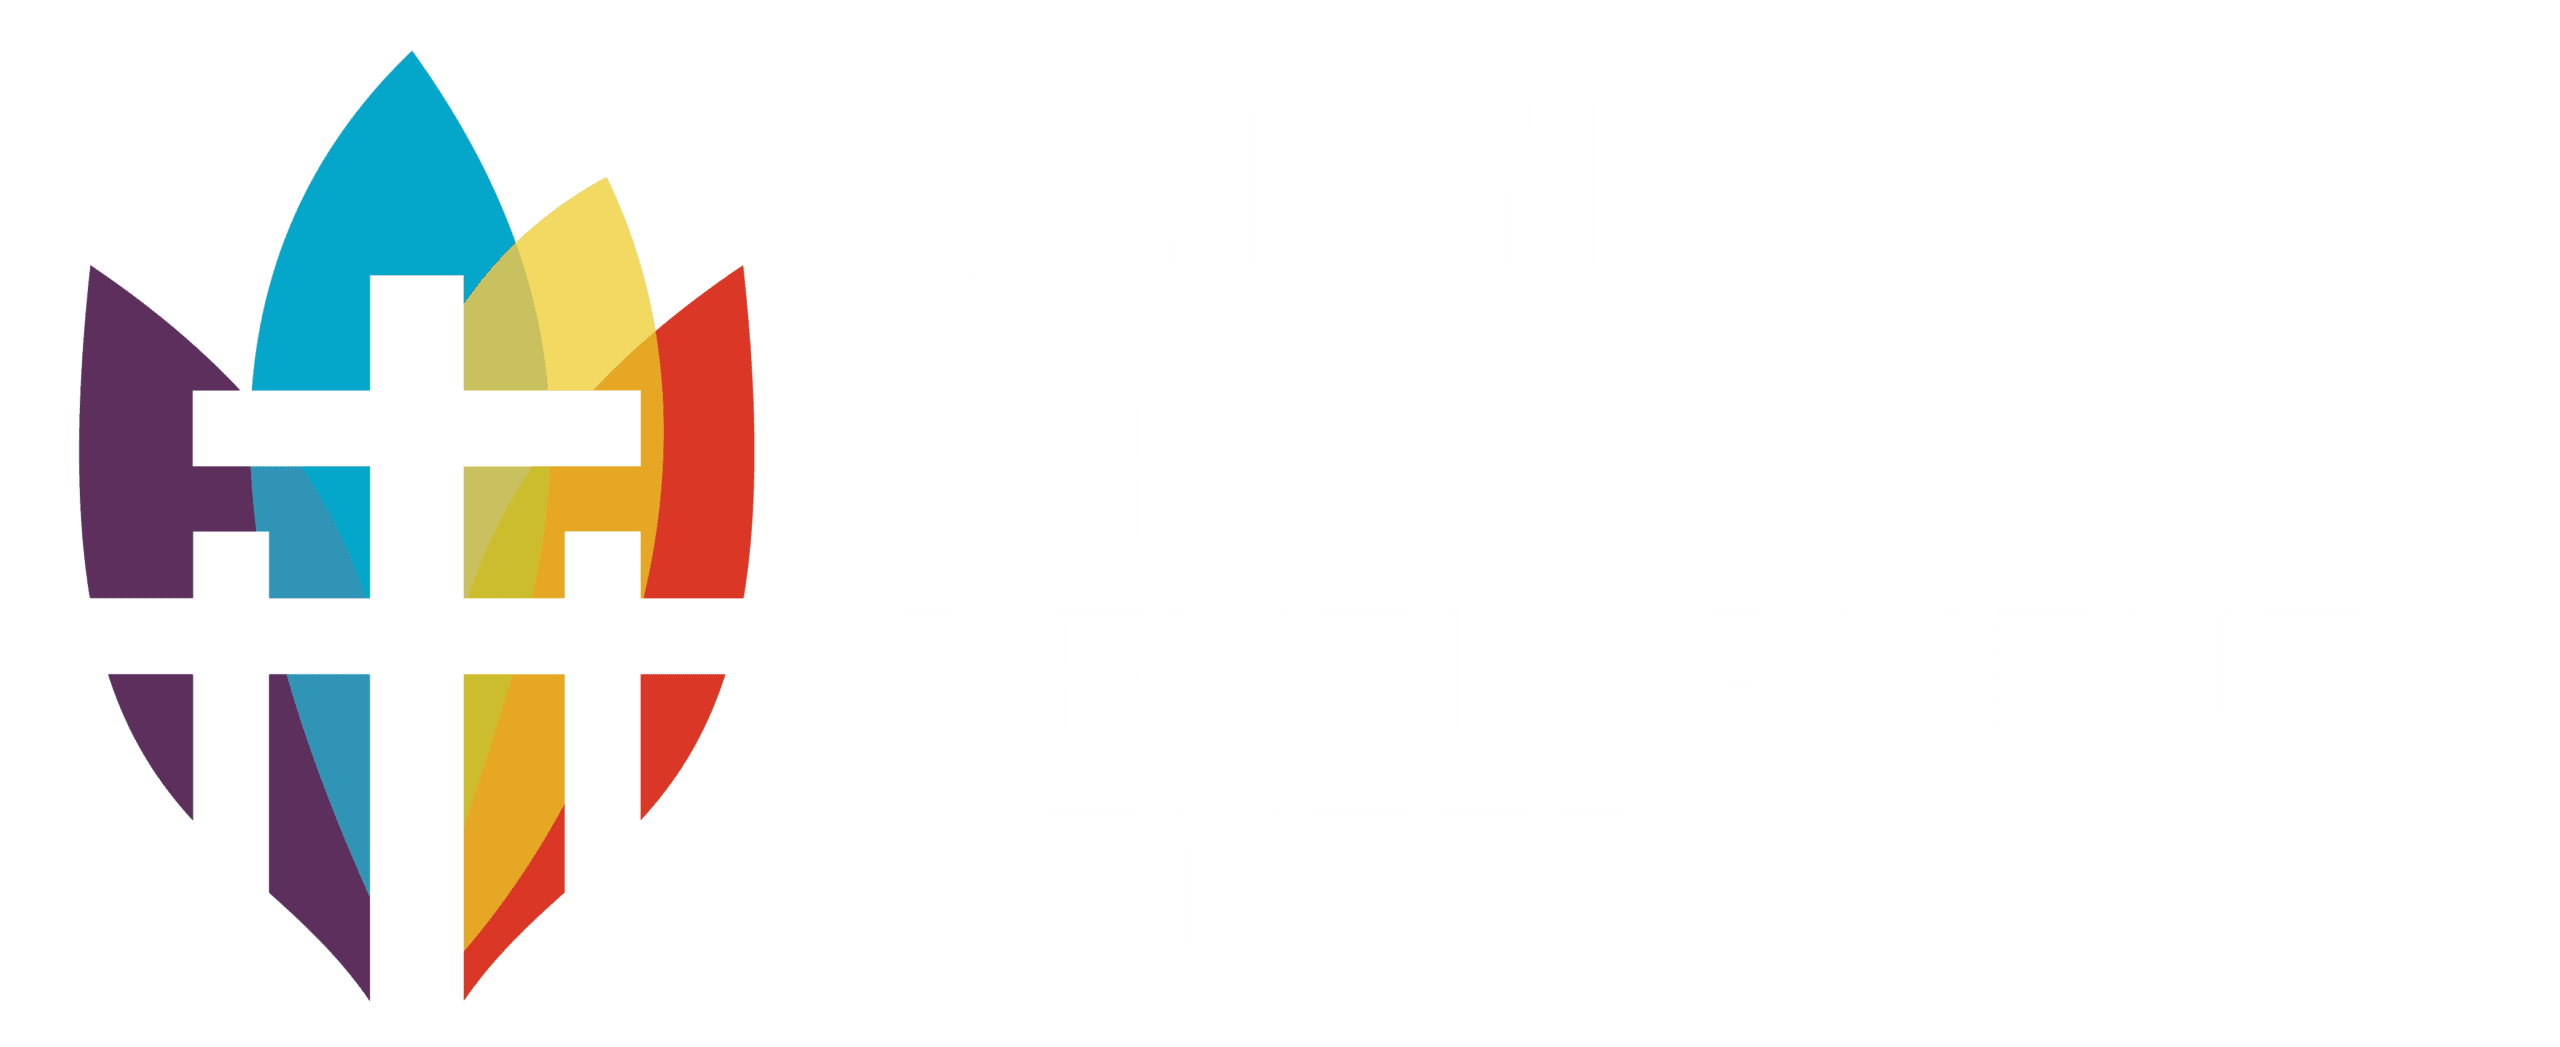 St Philip Neri Child Development Center